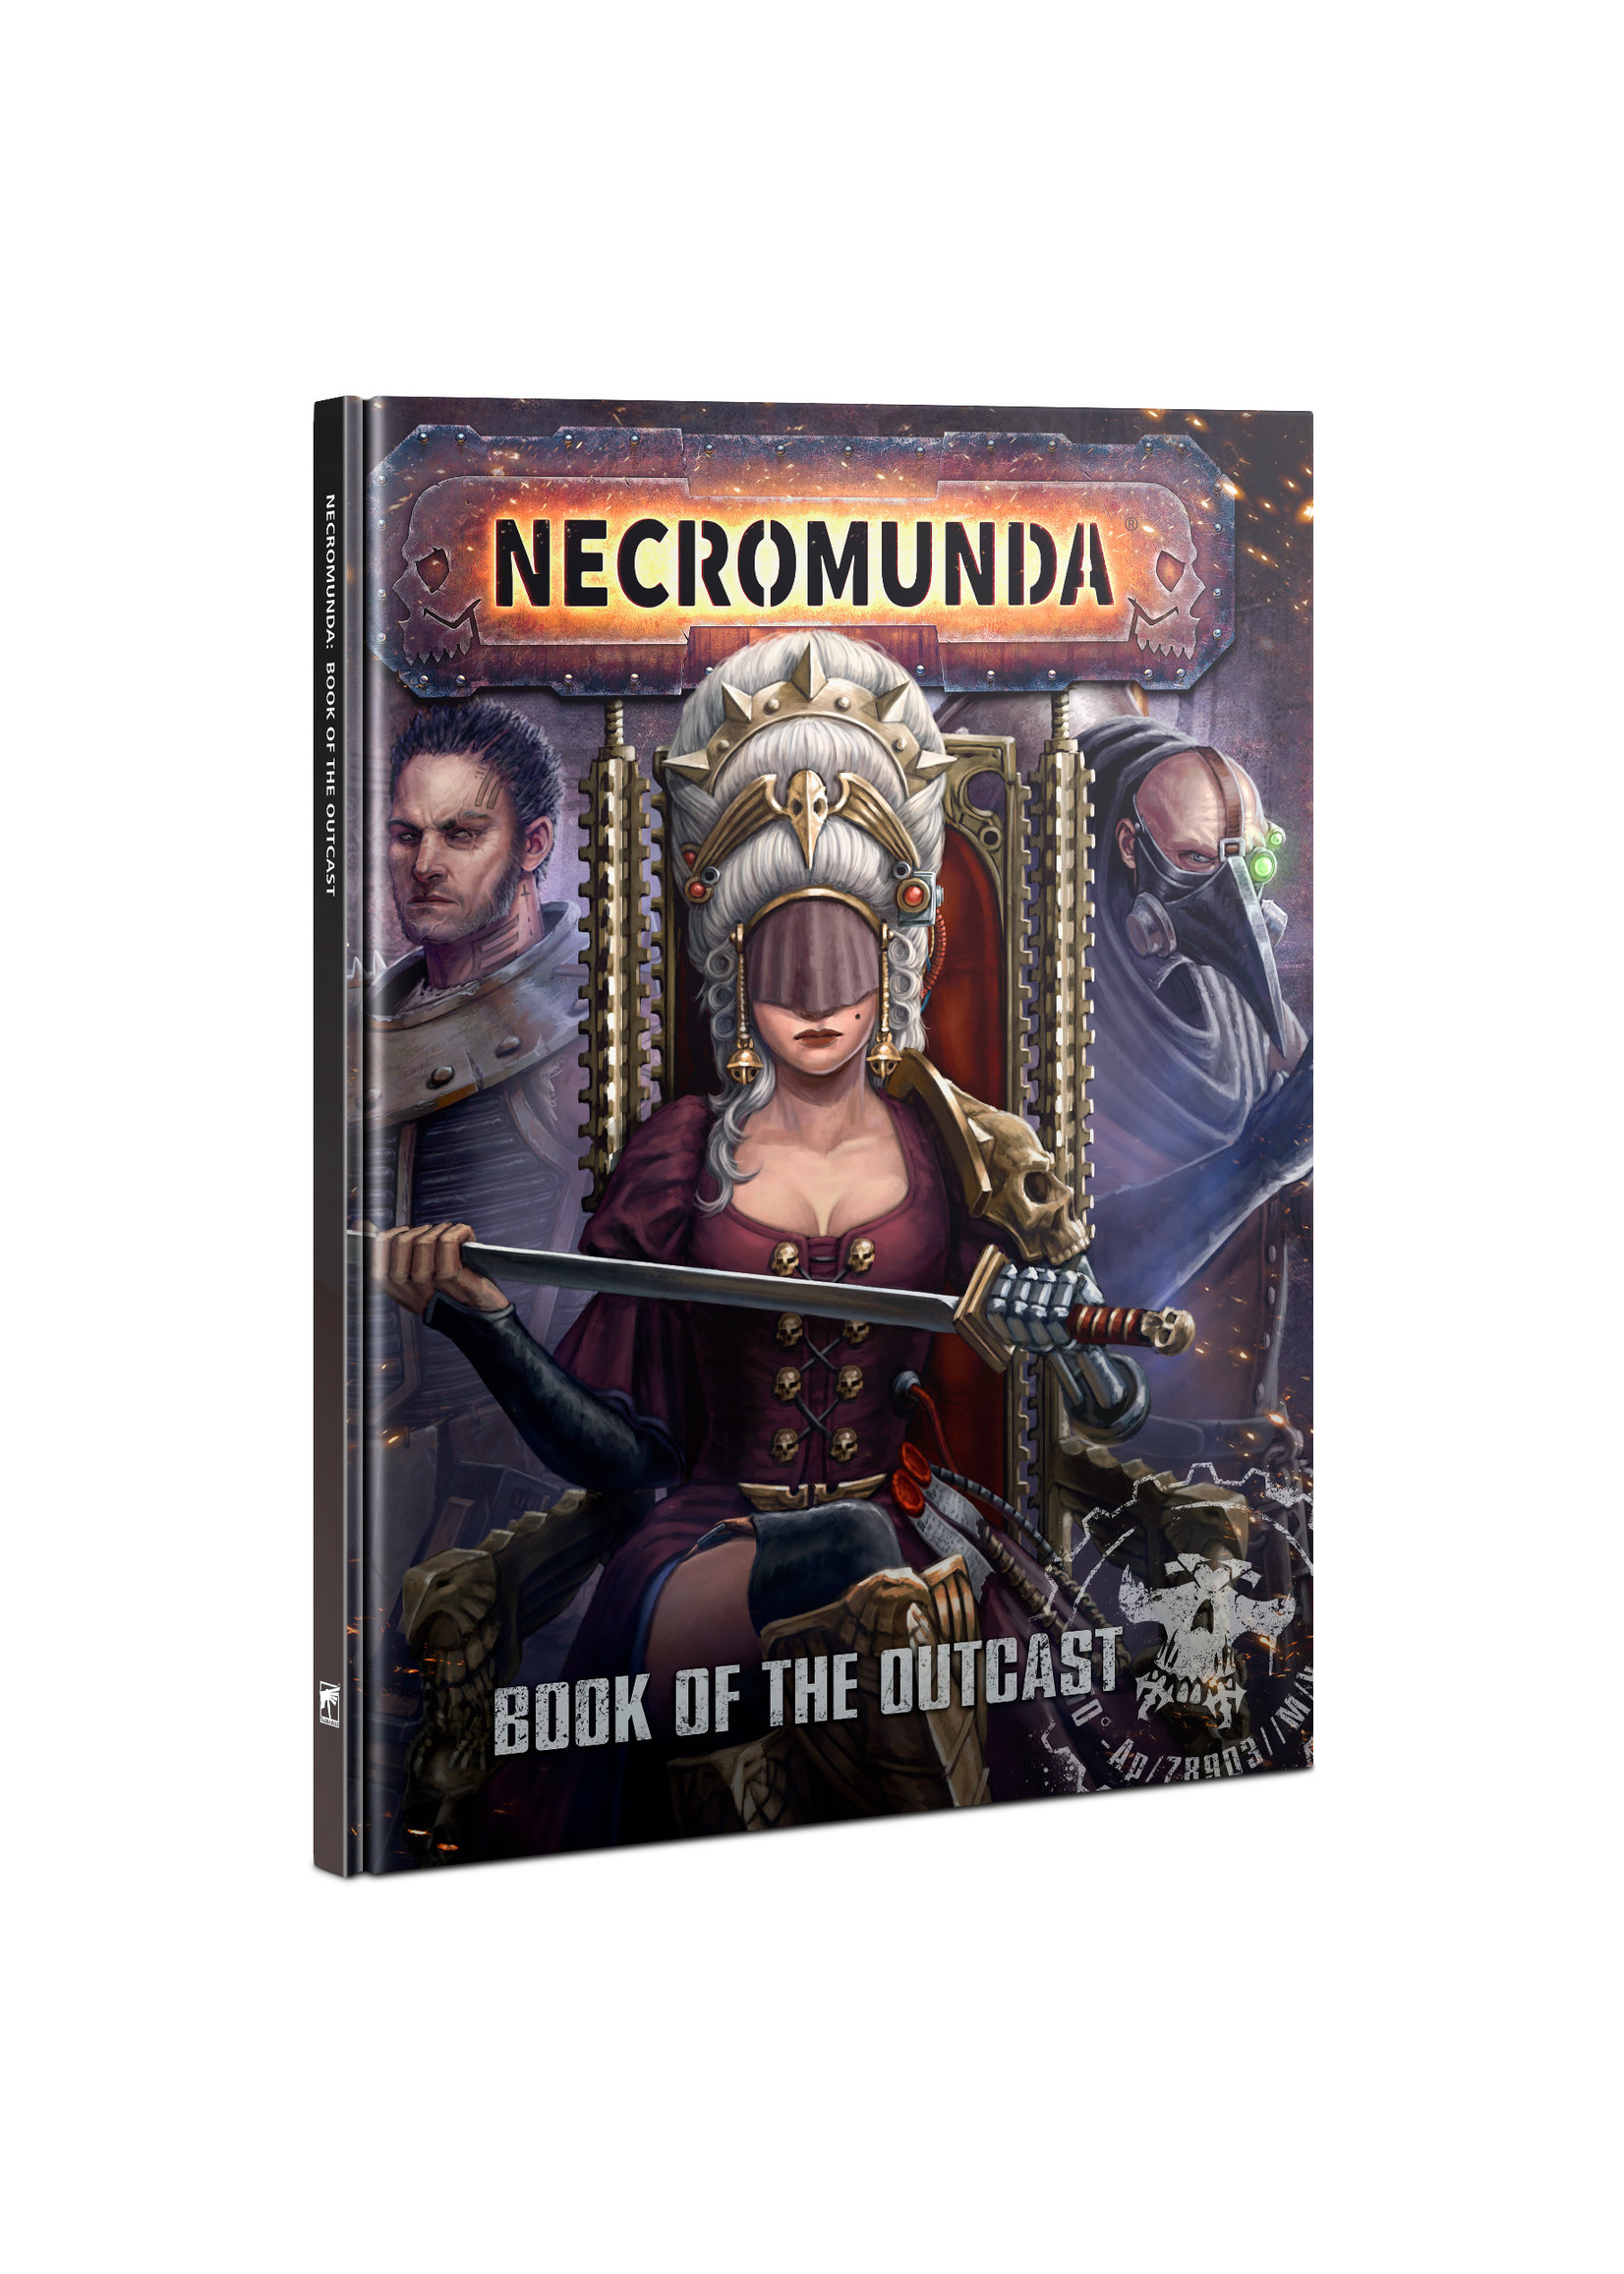 Games Workshop NECROMUNDA: BOOK OF THE OUTCAST